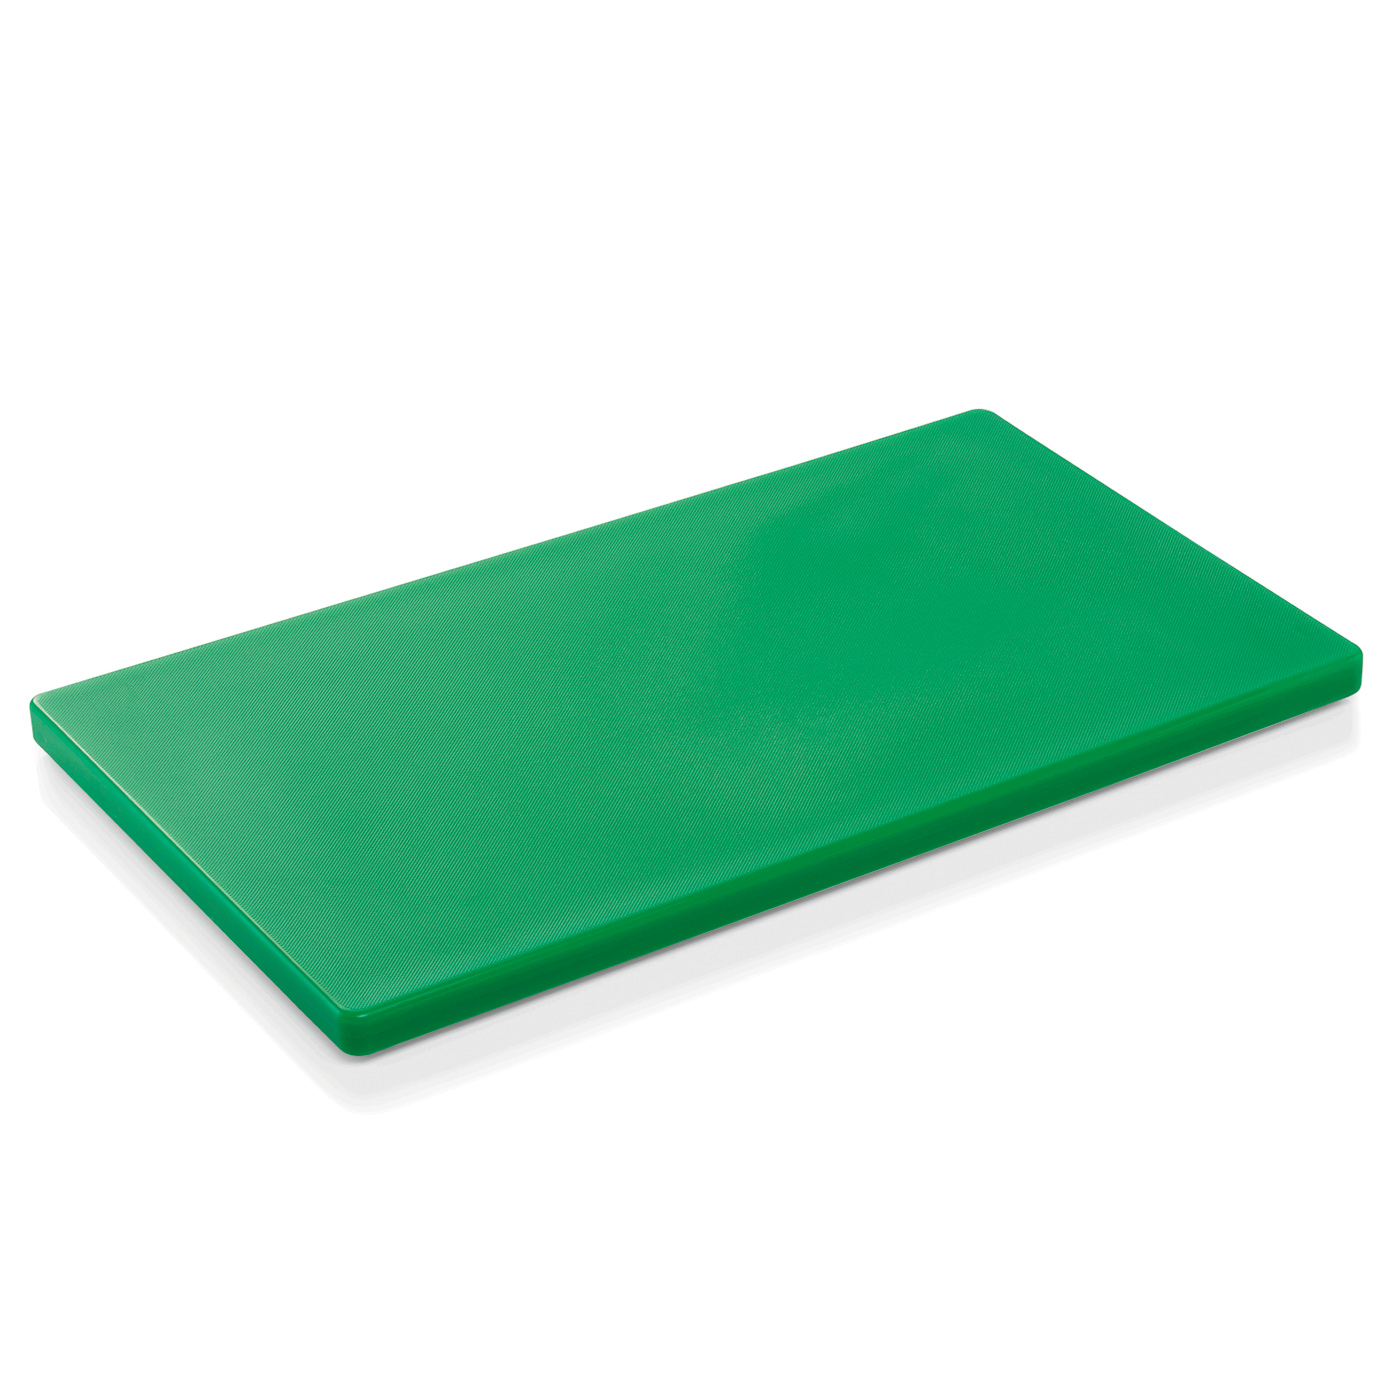 HACCP Schneidbrett, Material: Polyethylen. Farbe: grün.